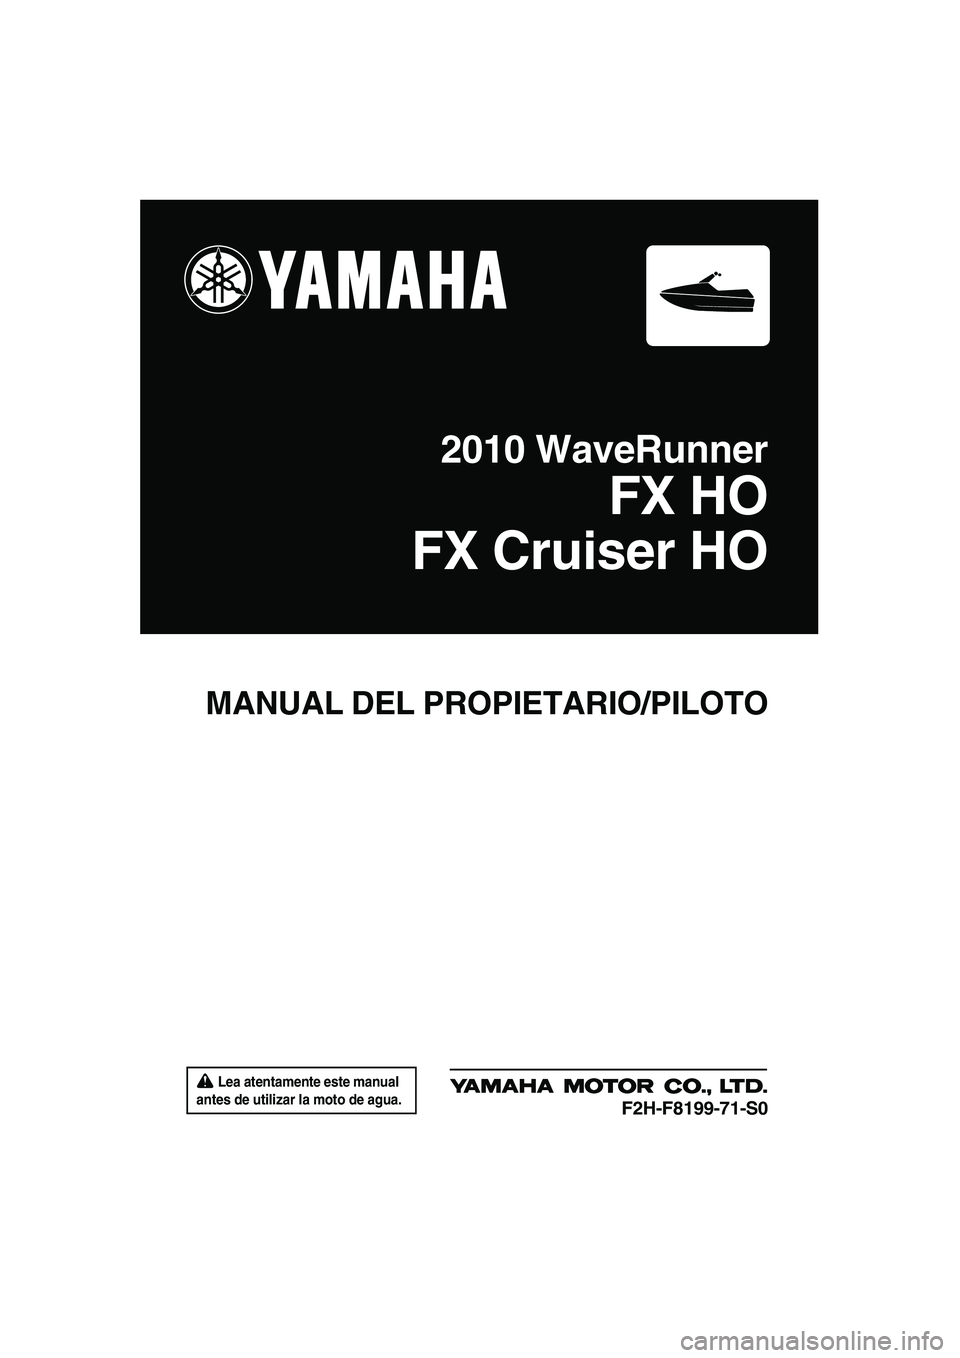 YAMAHA FX HO CRUISER 2010  Manuale de Empleo (in Spanish) 